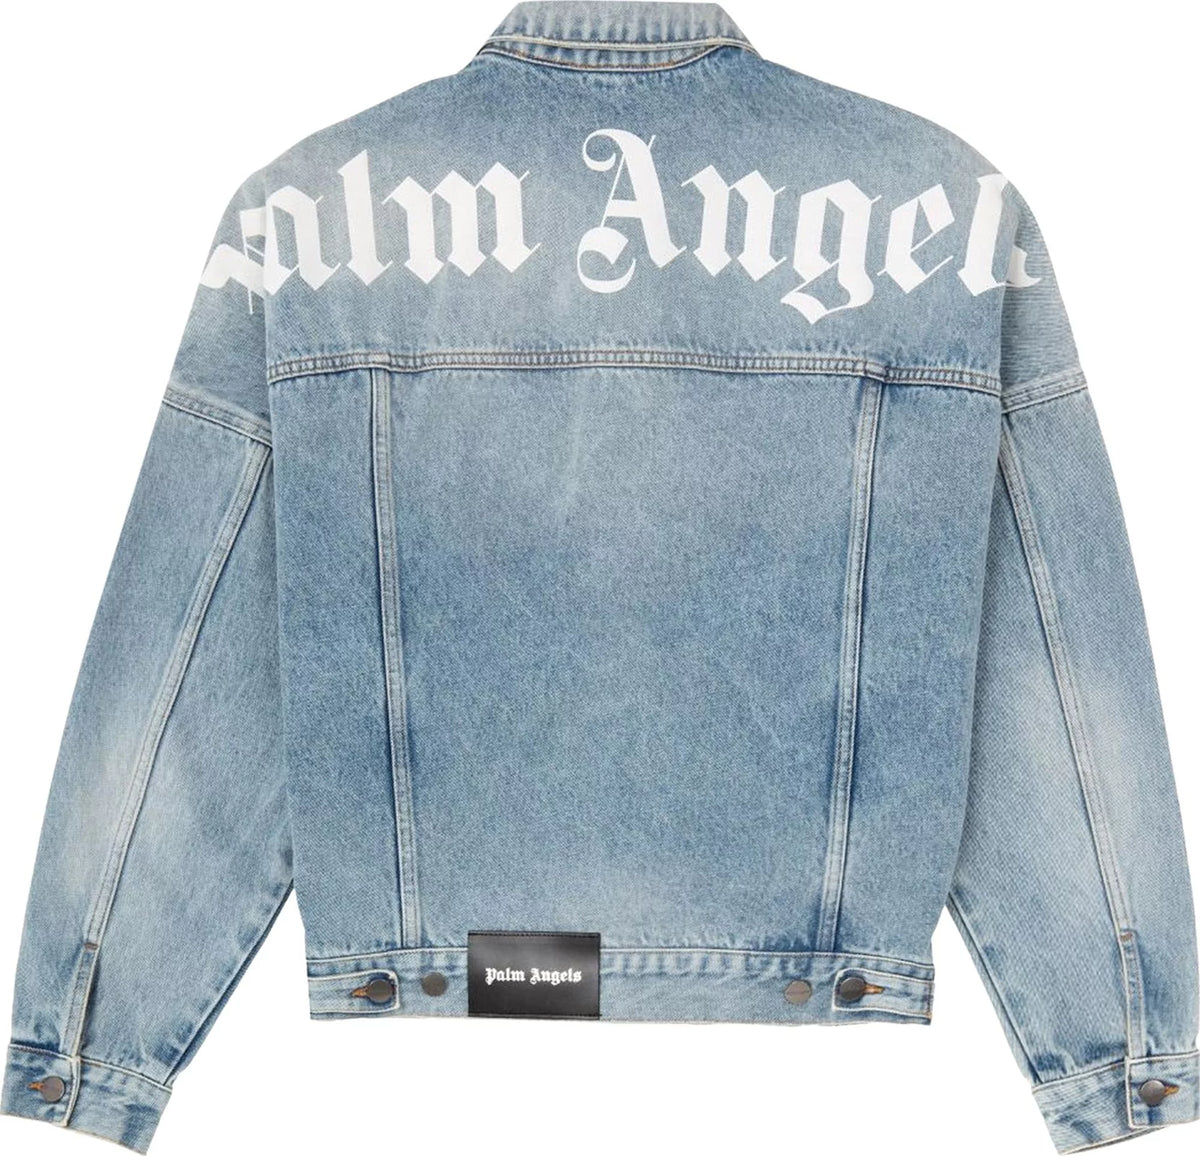 PALM ANGELS Logo Denim Jacket